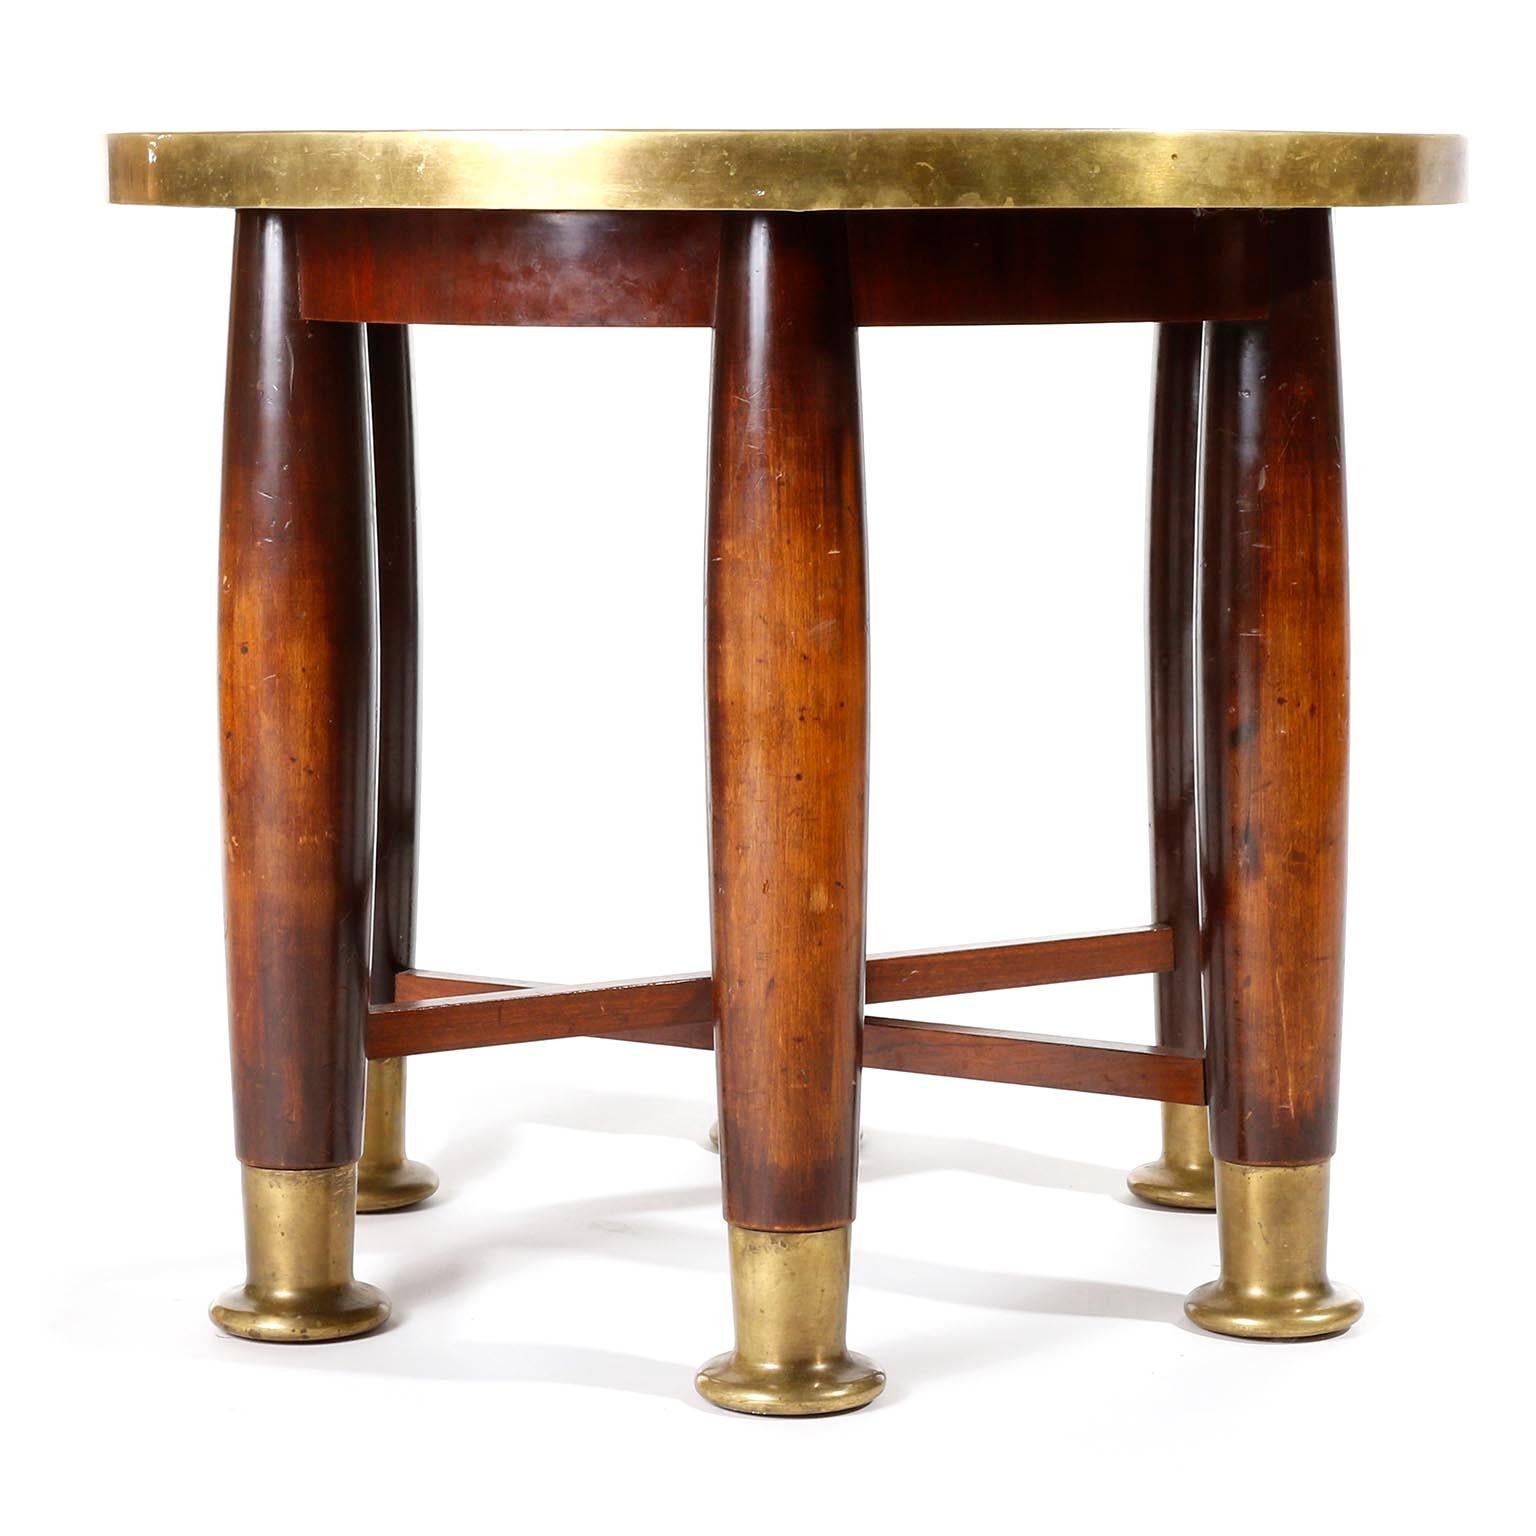 Austrian Adolf Loos Six-Legged 'Haberfeld' Table, F.O. Schmidt, Brass Wood, Austria, 1899 For Sale